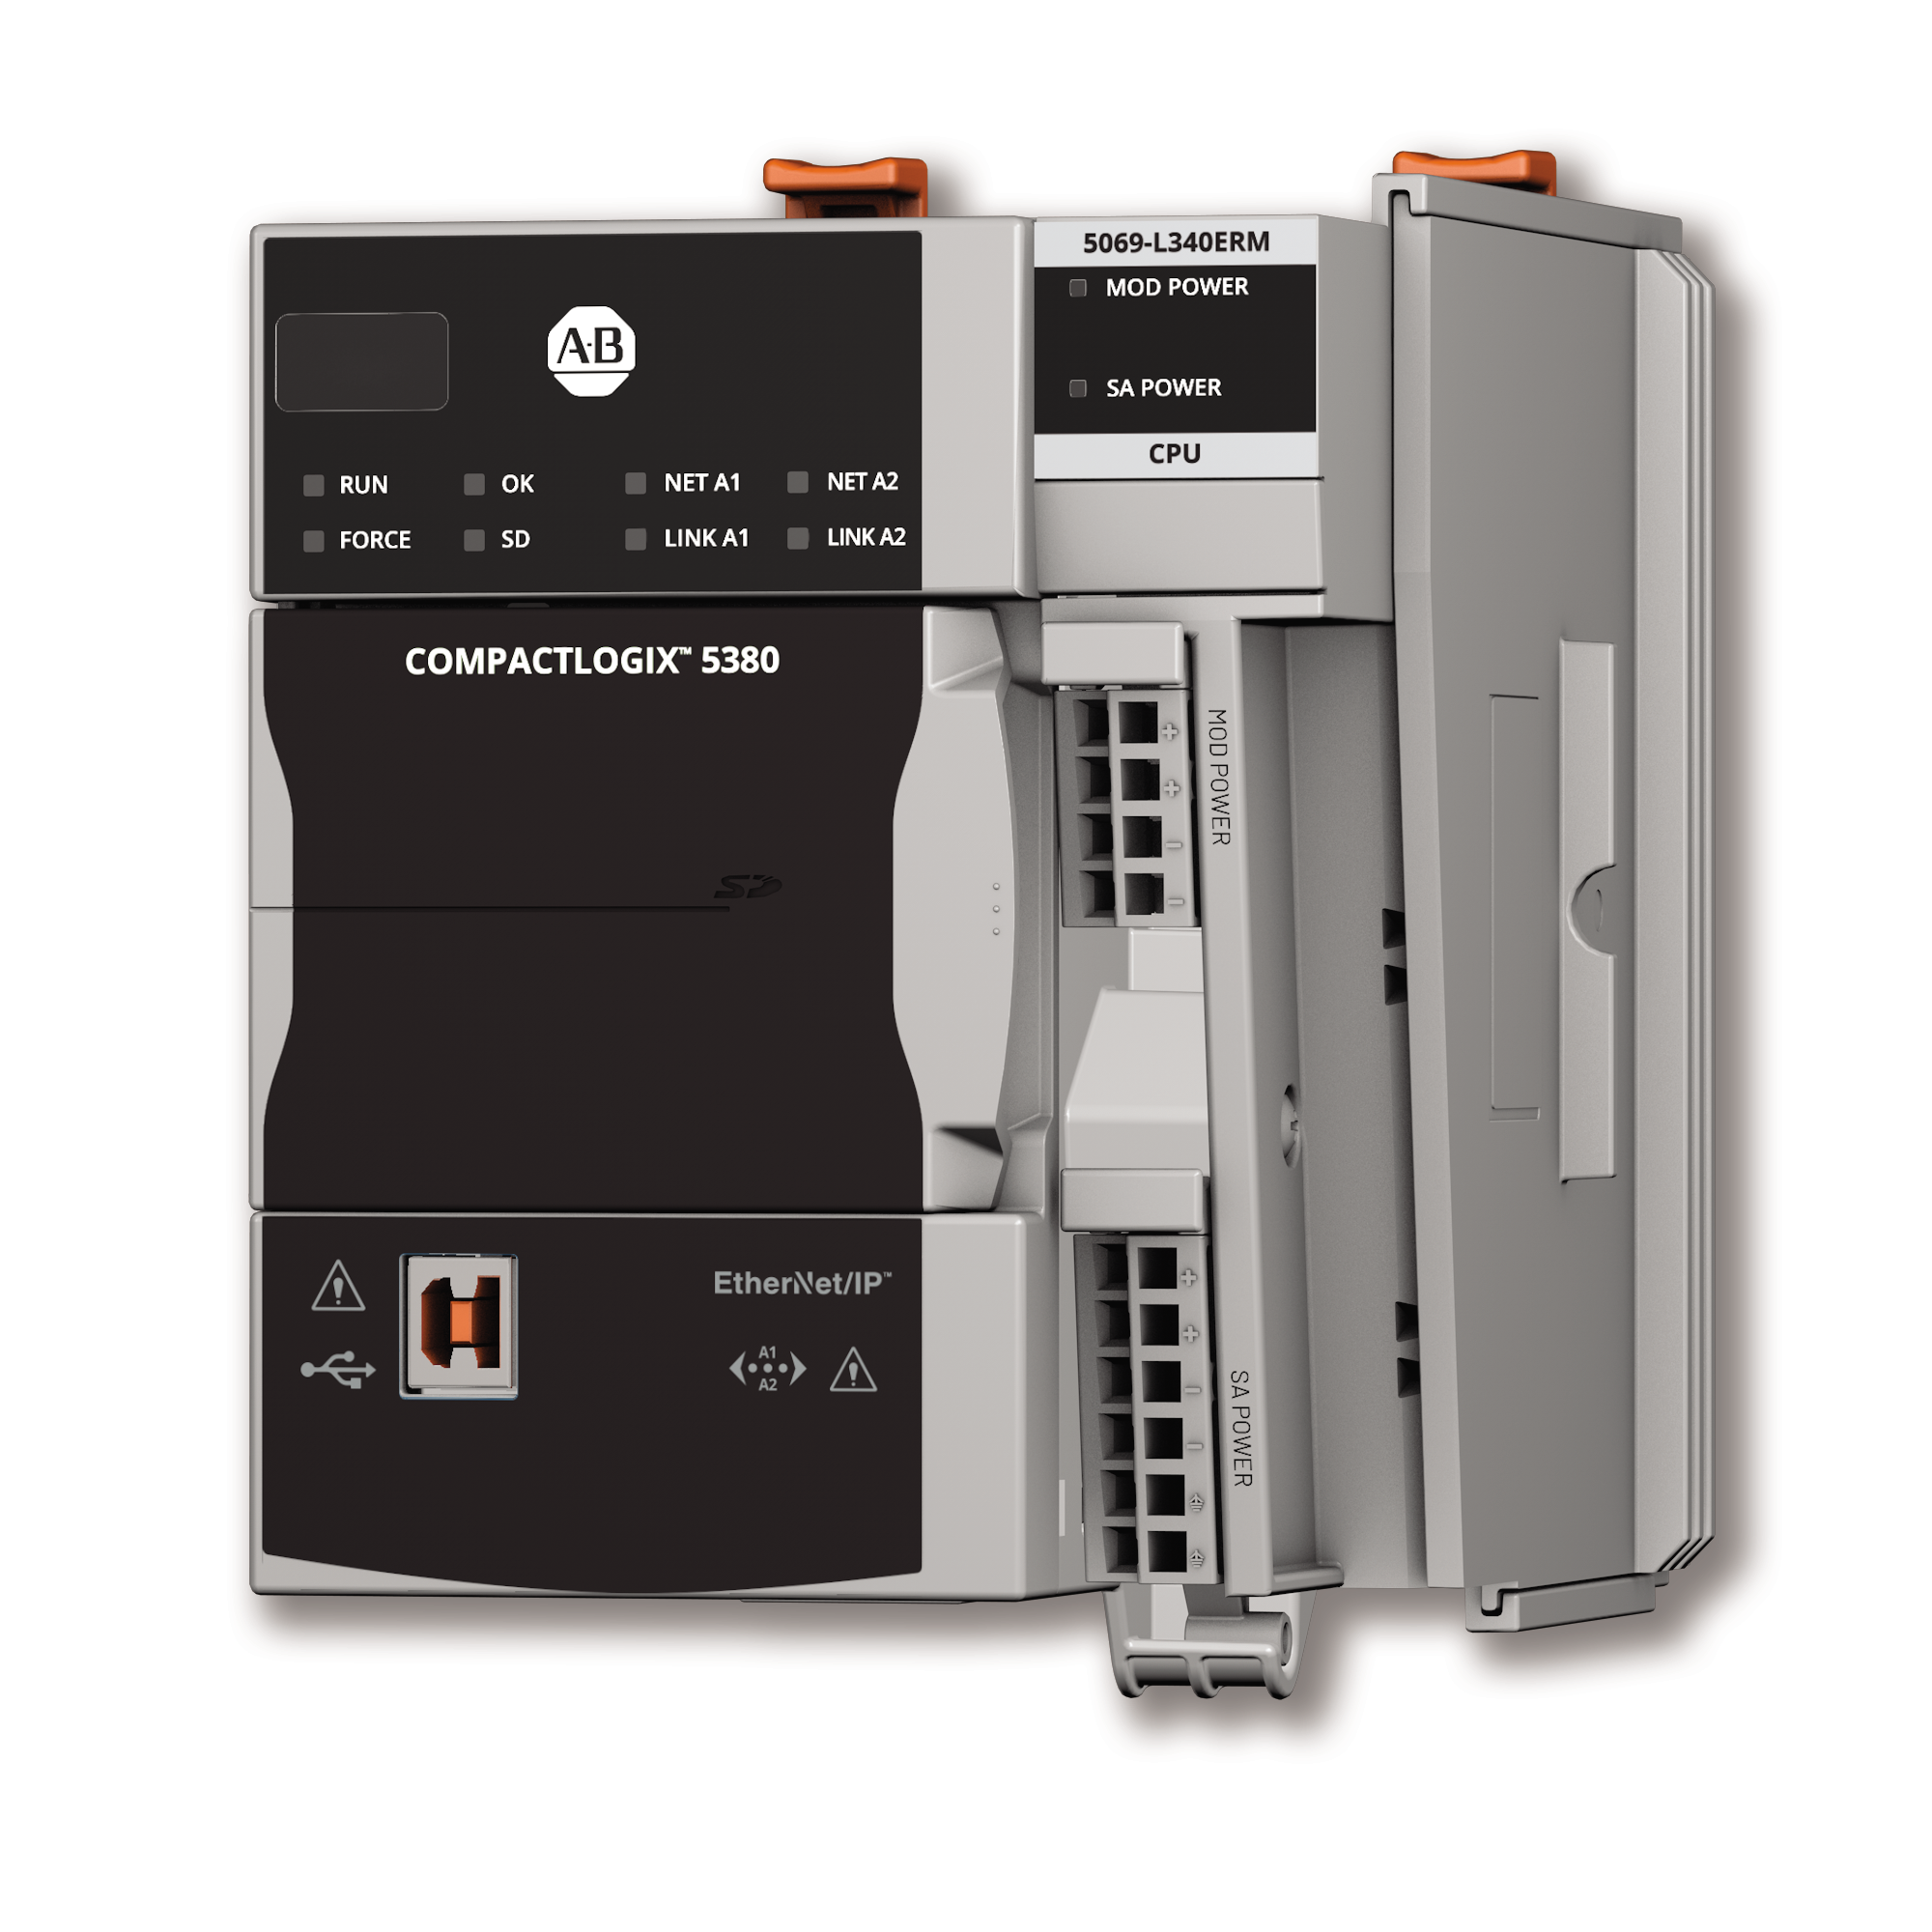 CompactLogix 5380 Controllers